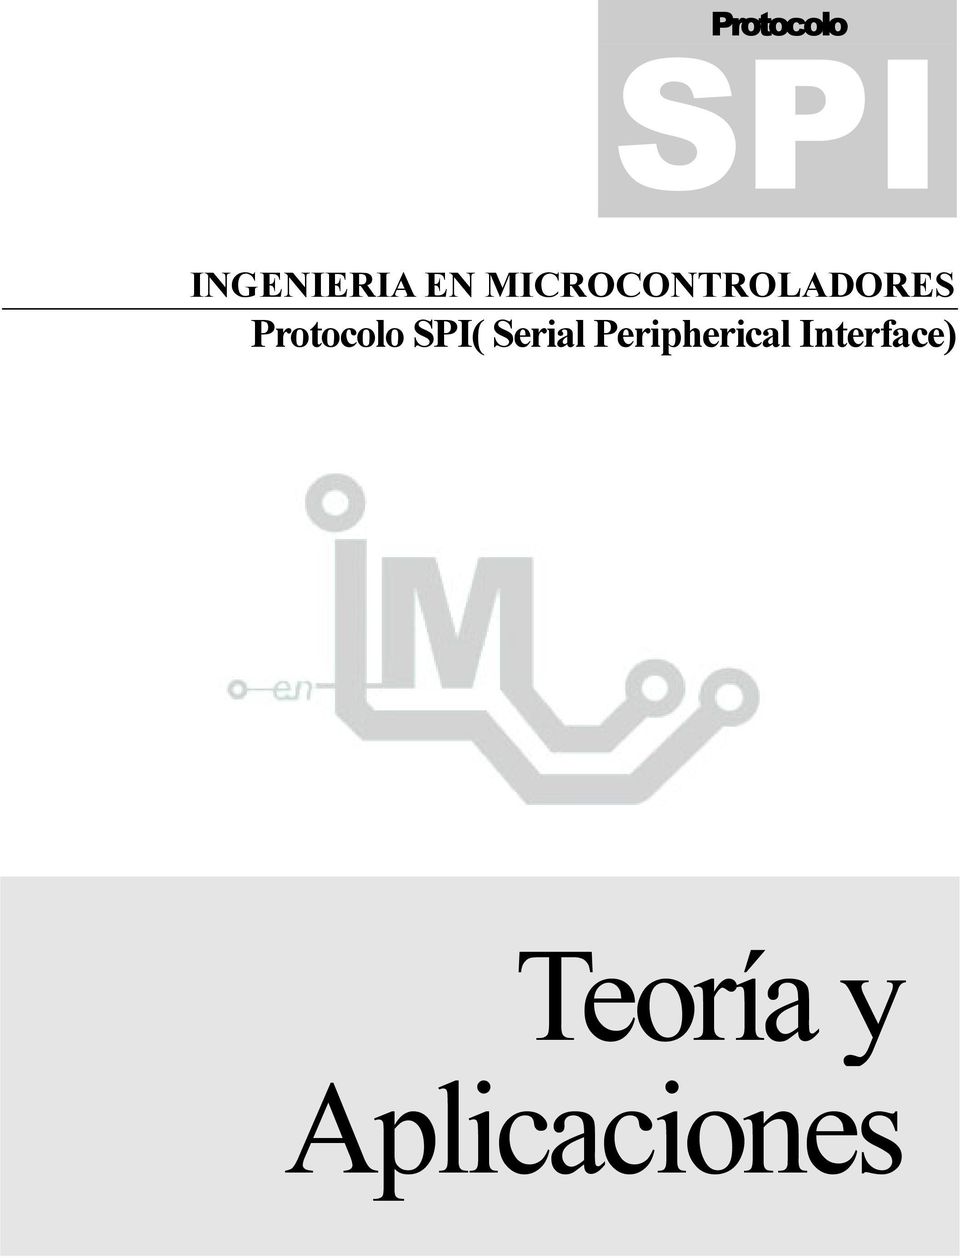 SPI( Serial Peripherical